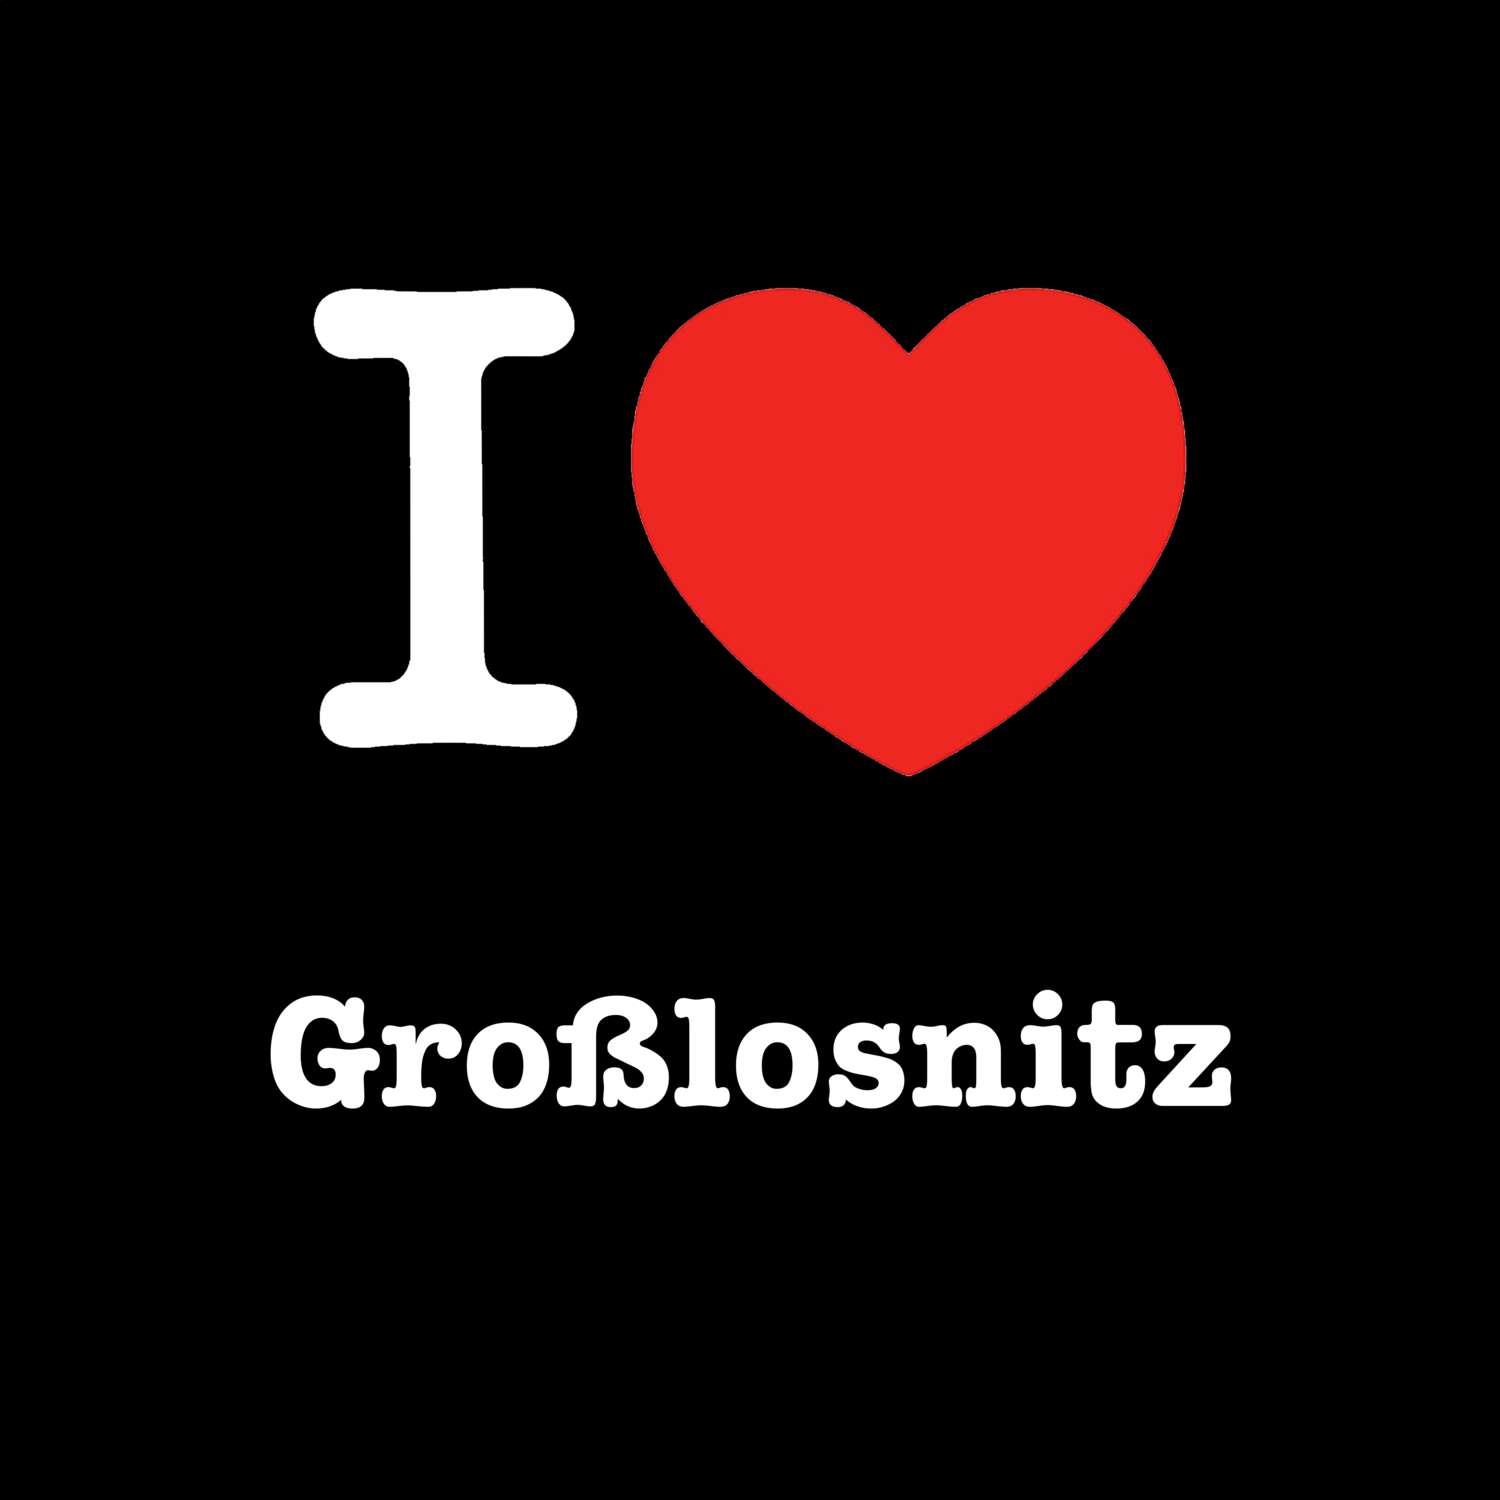 Großlosnitz T-Shirt »I love«